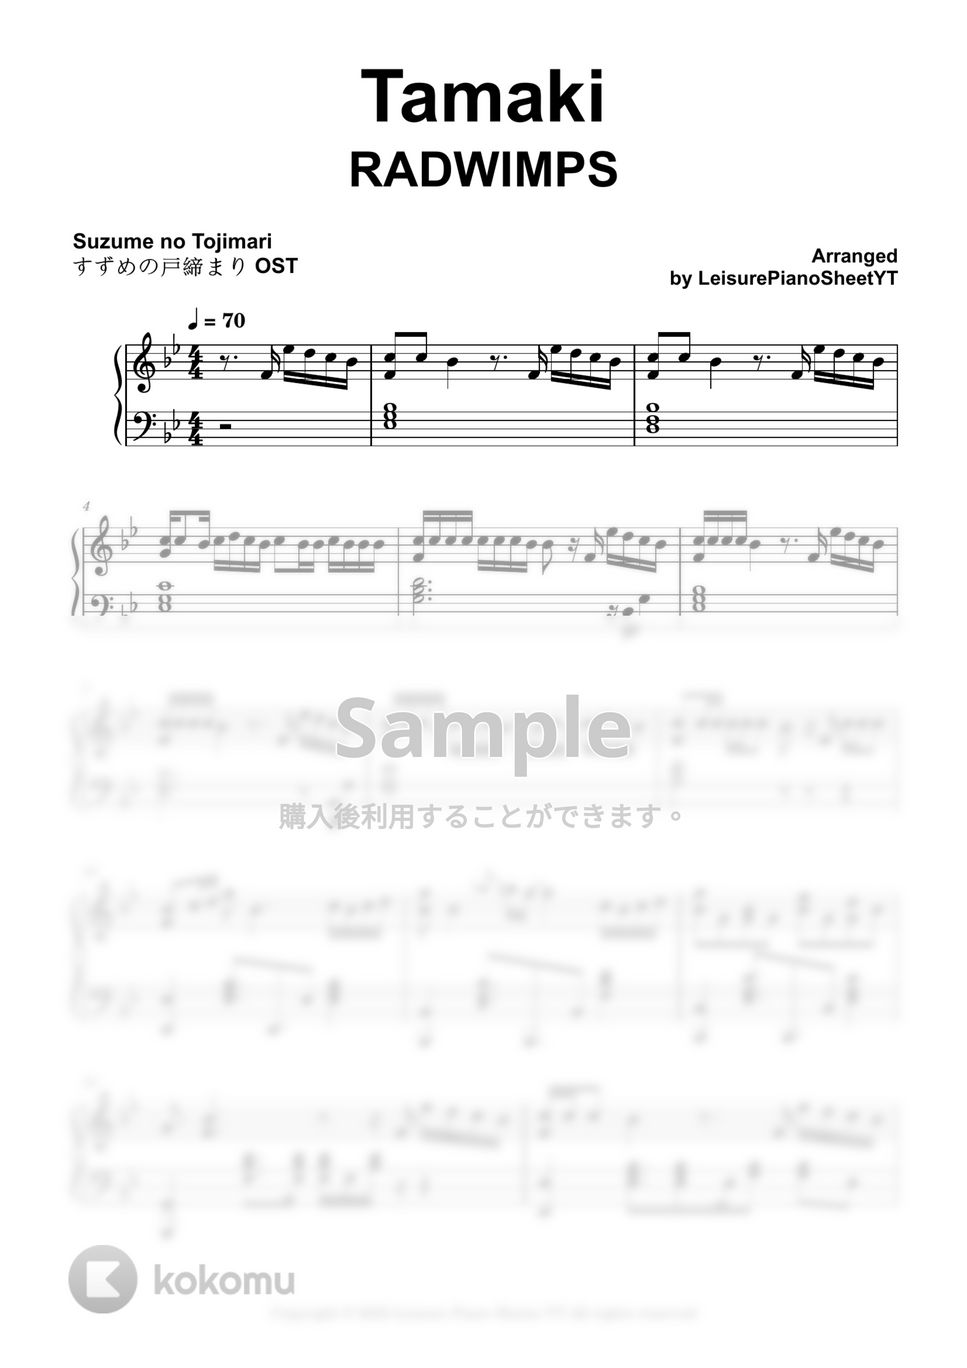 RADWIMPS - Tamaki (すずめの戸締まり OST) by Leisure Piano Sheets